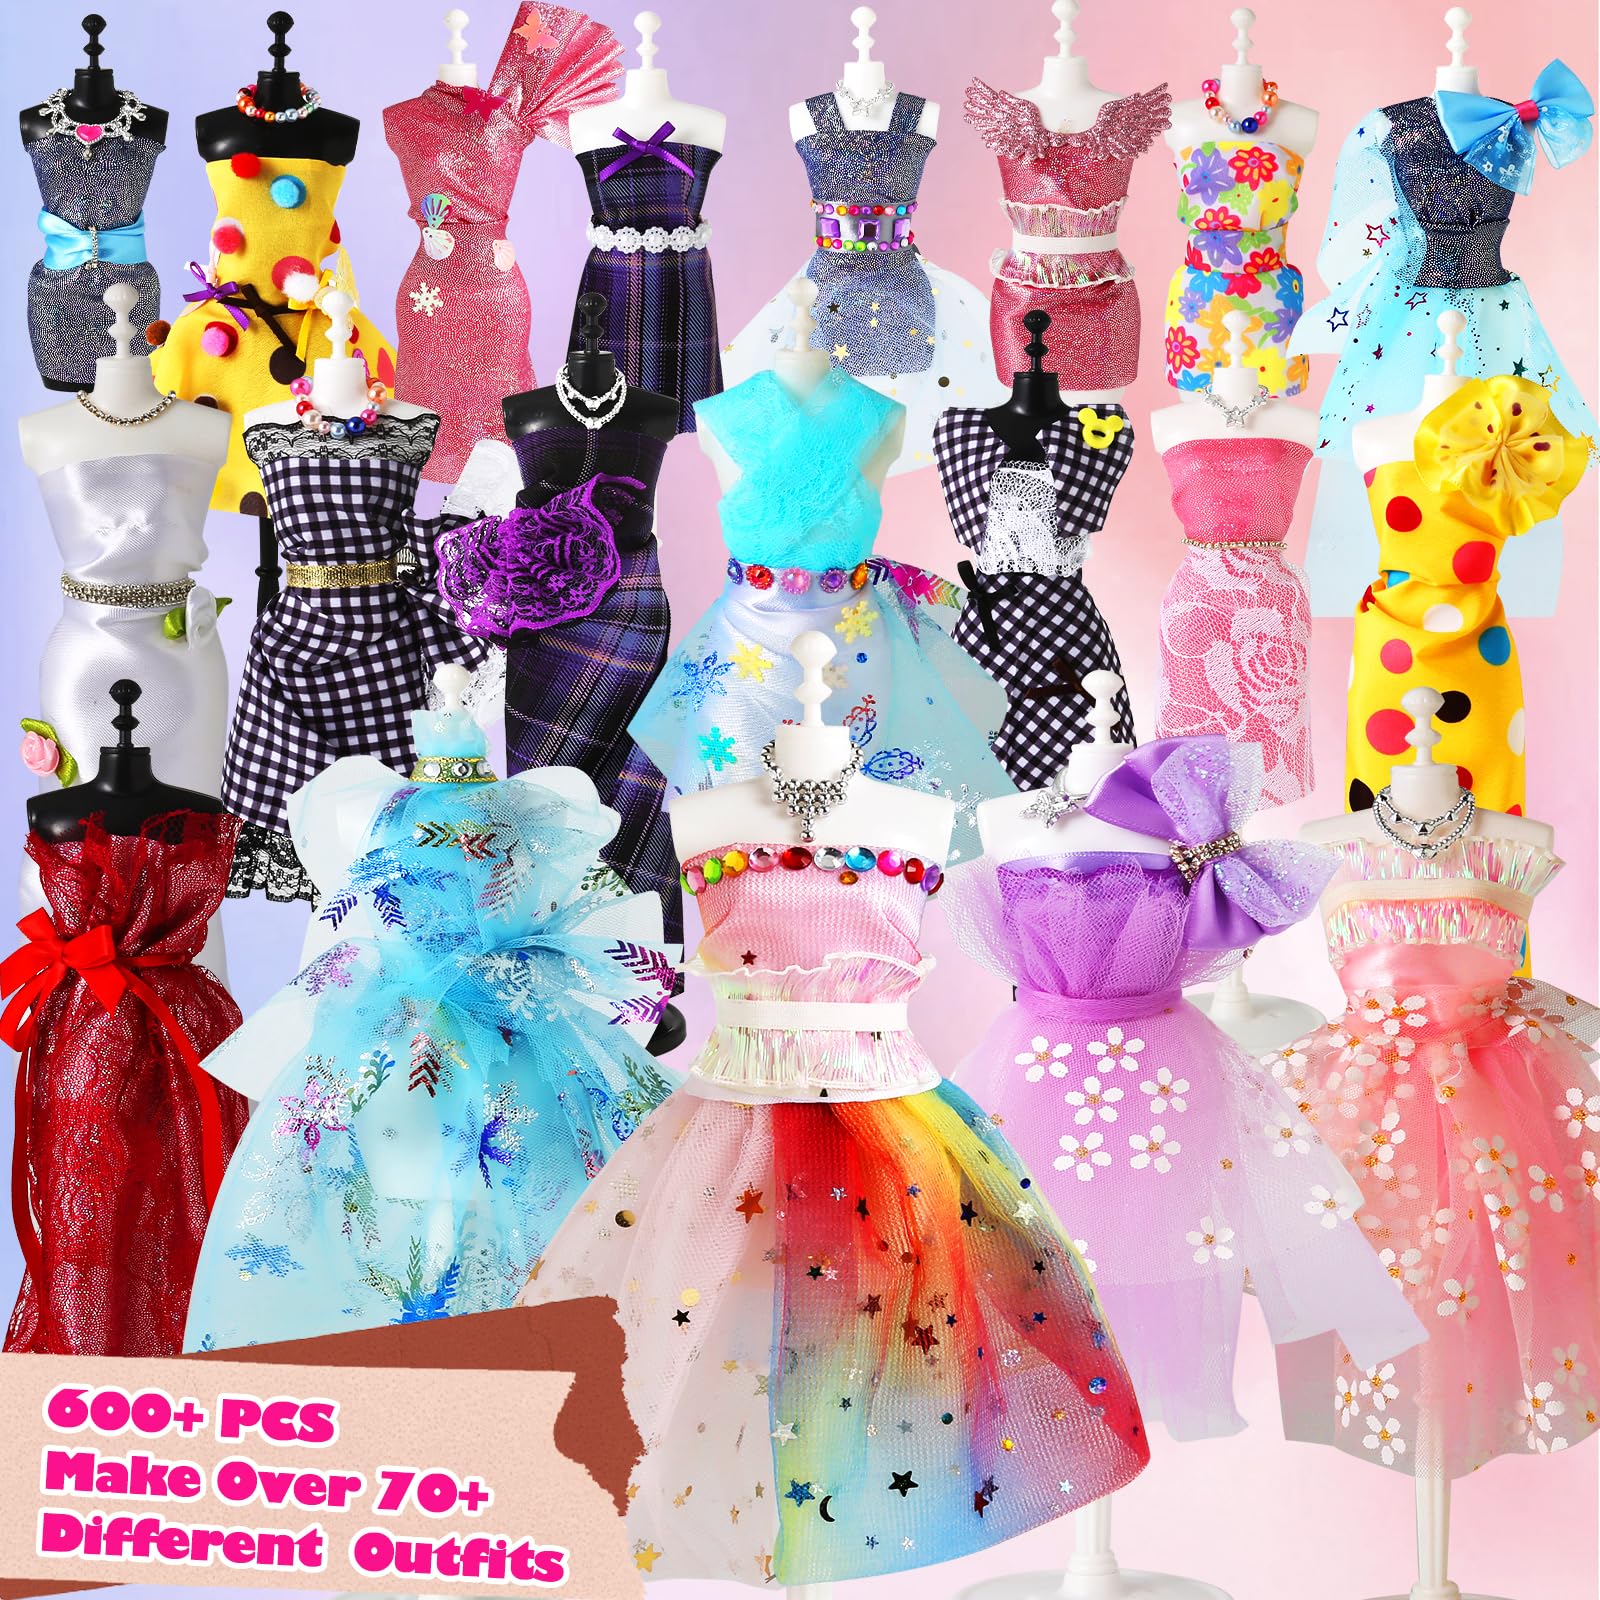  Jumlys 600+PCS Fashion Designer Kits for Girls Ages 6